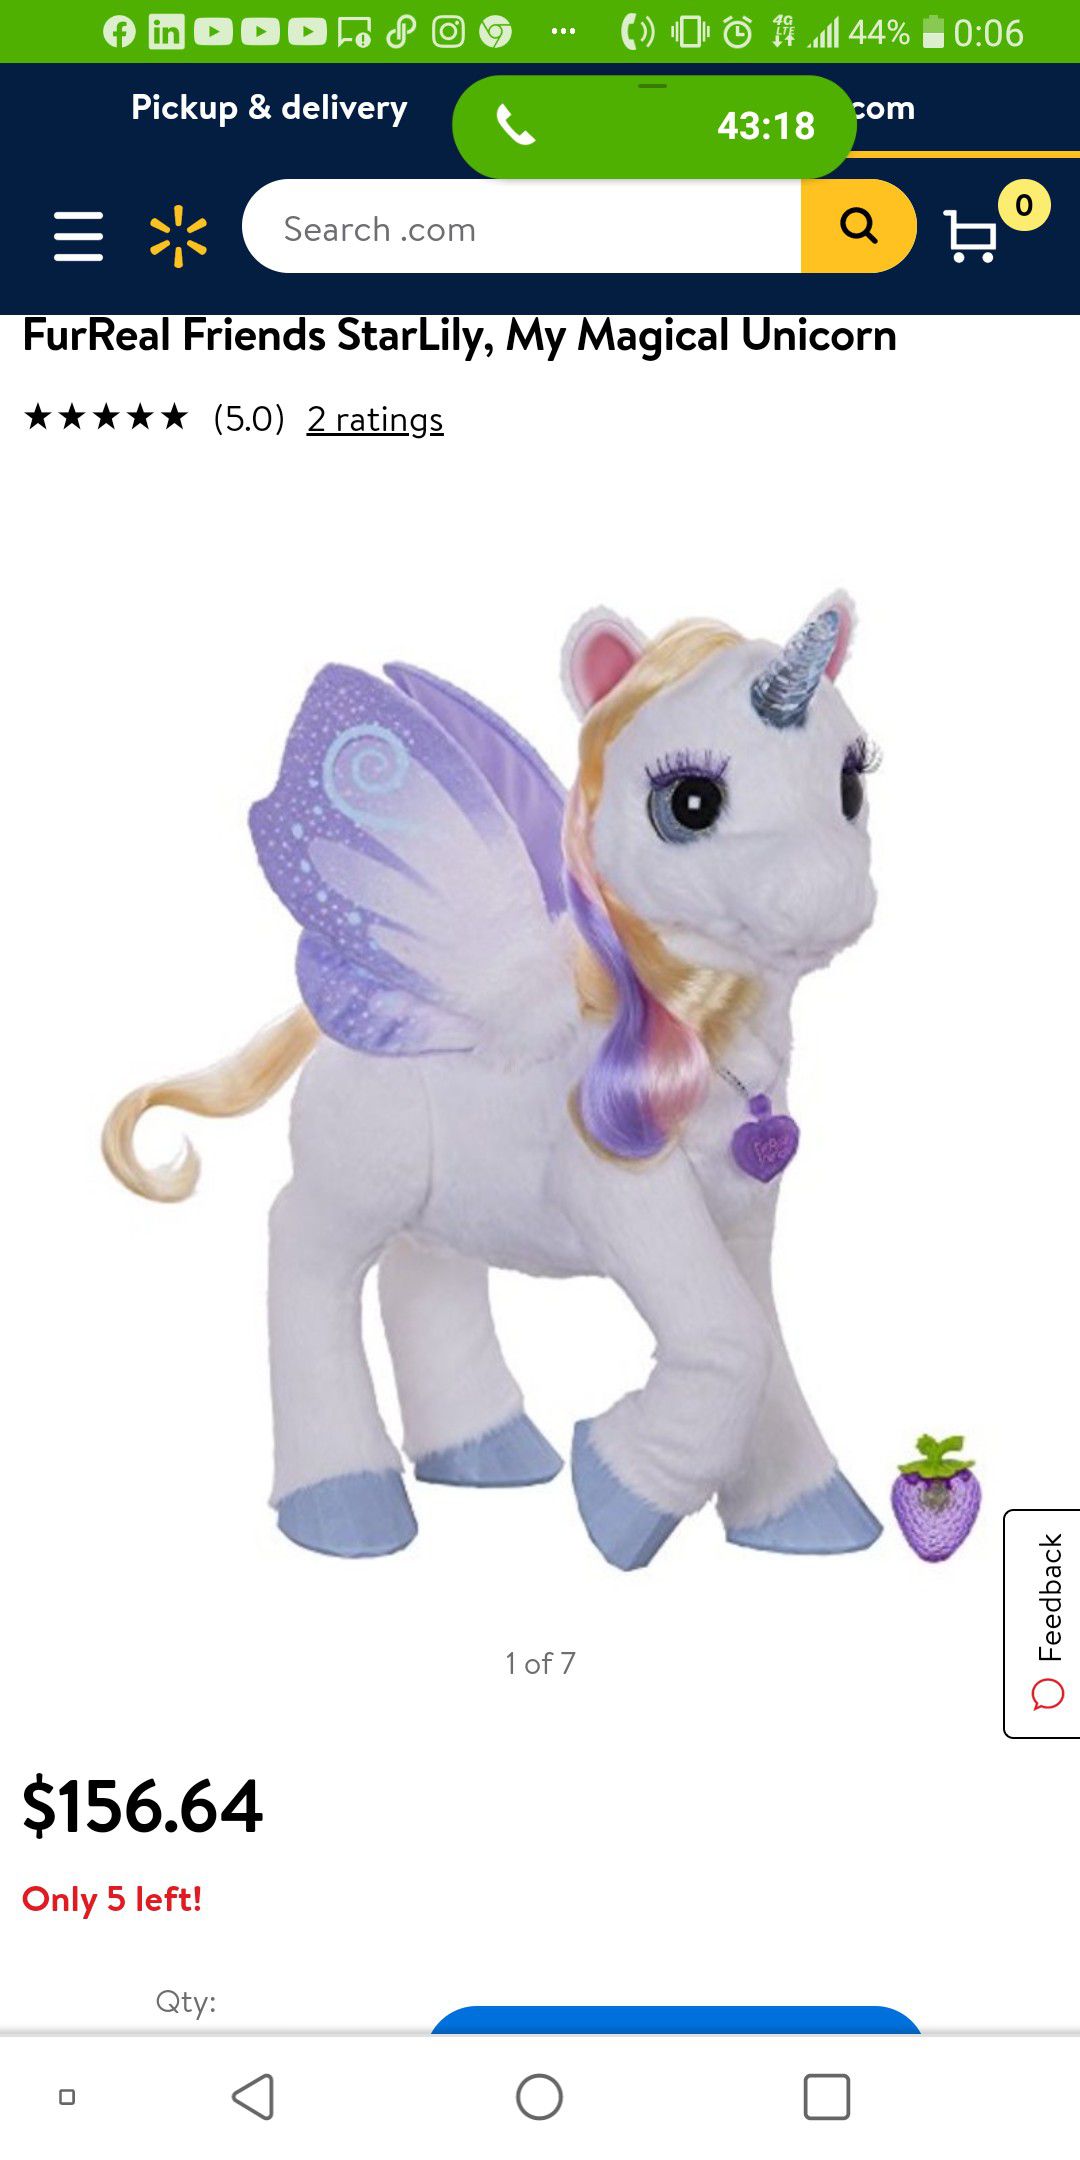 FurReal Friends Starlily, My Magical Unicorn